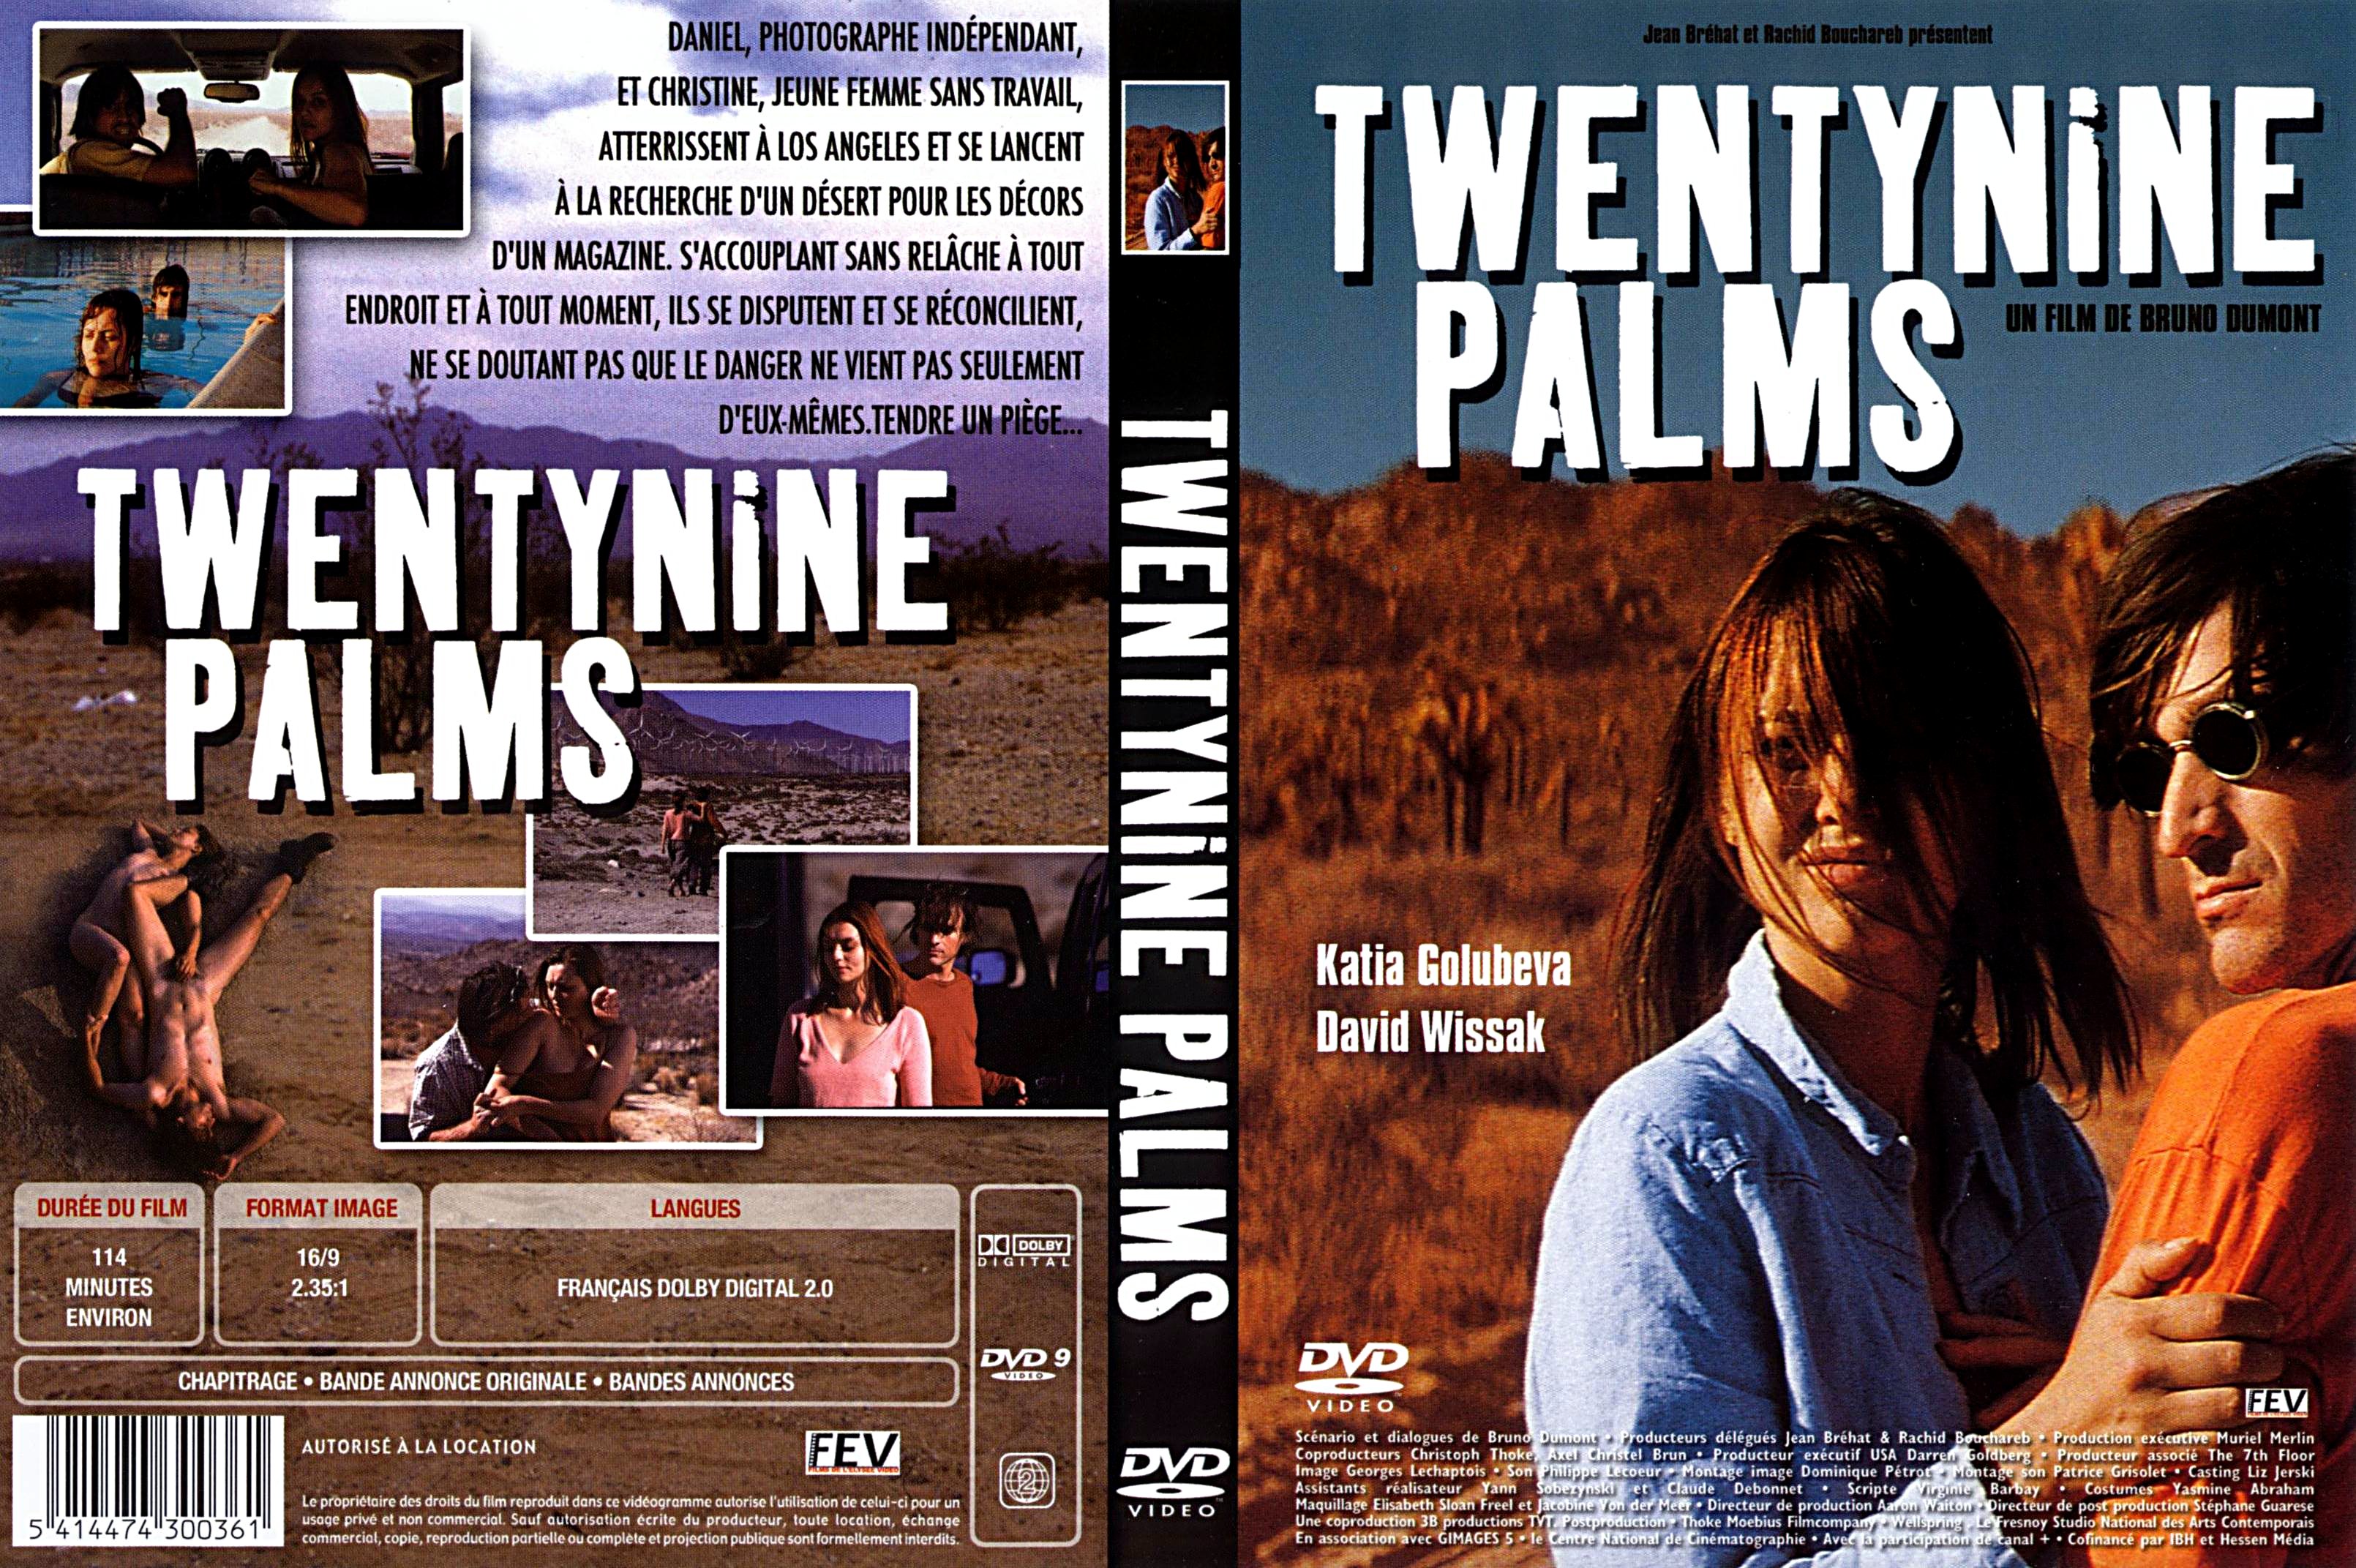 Jaquette DVD Twentynine palms